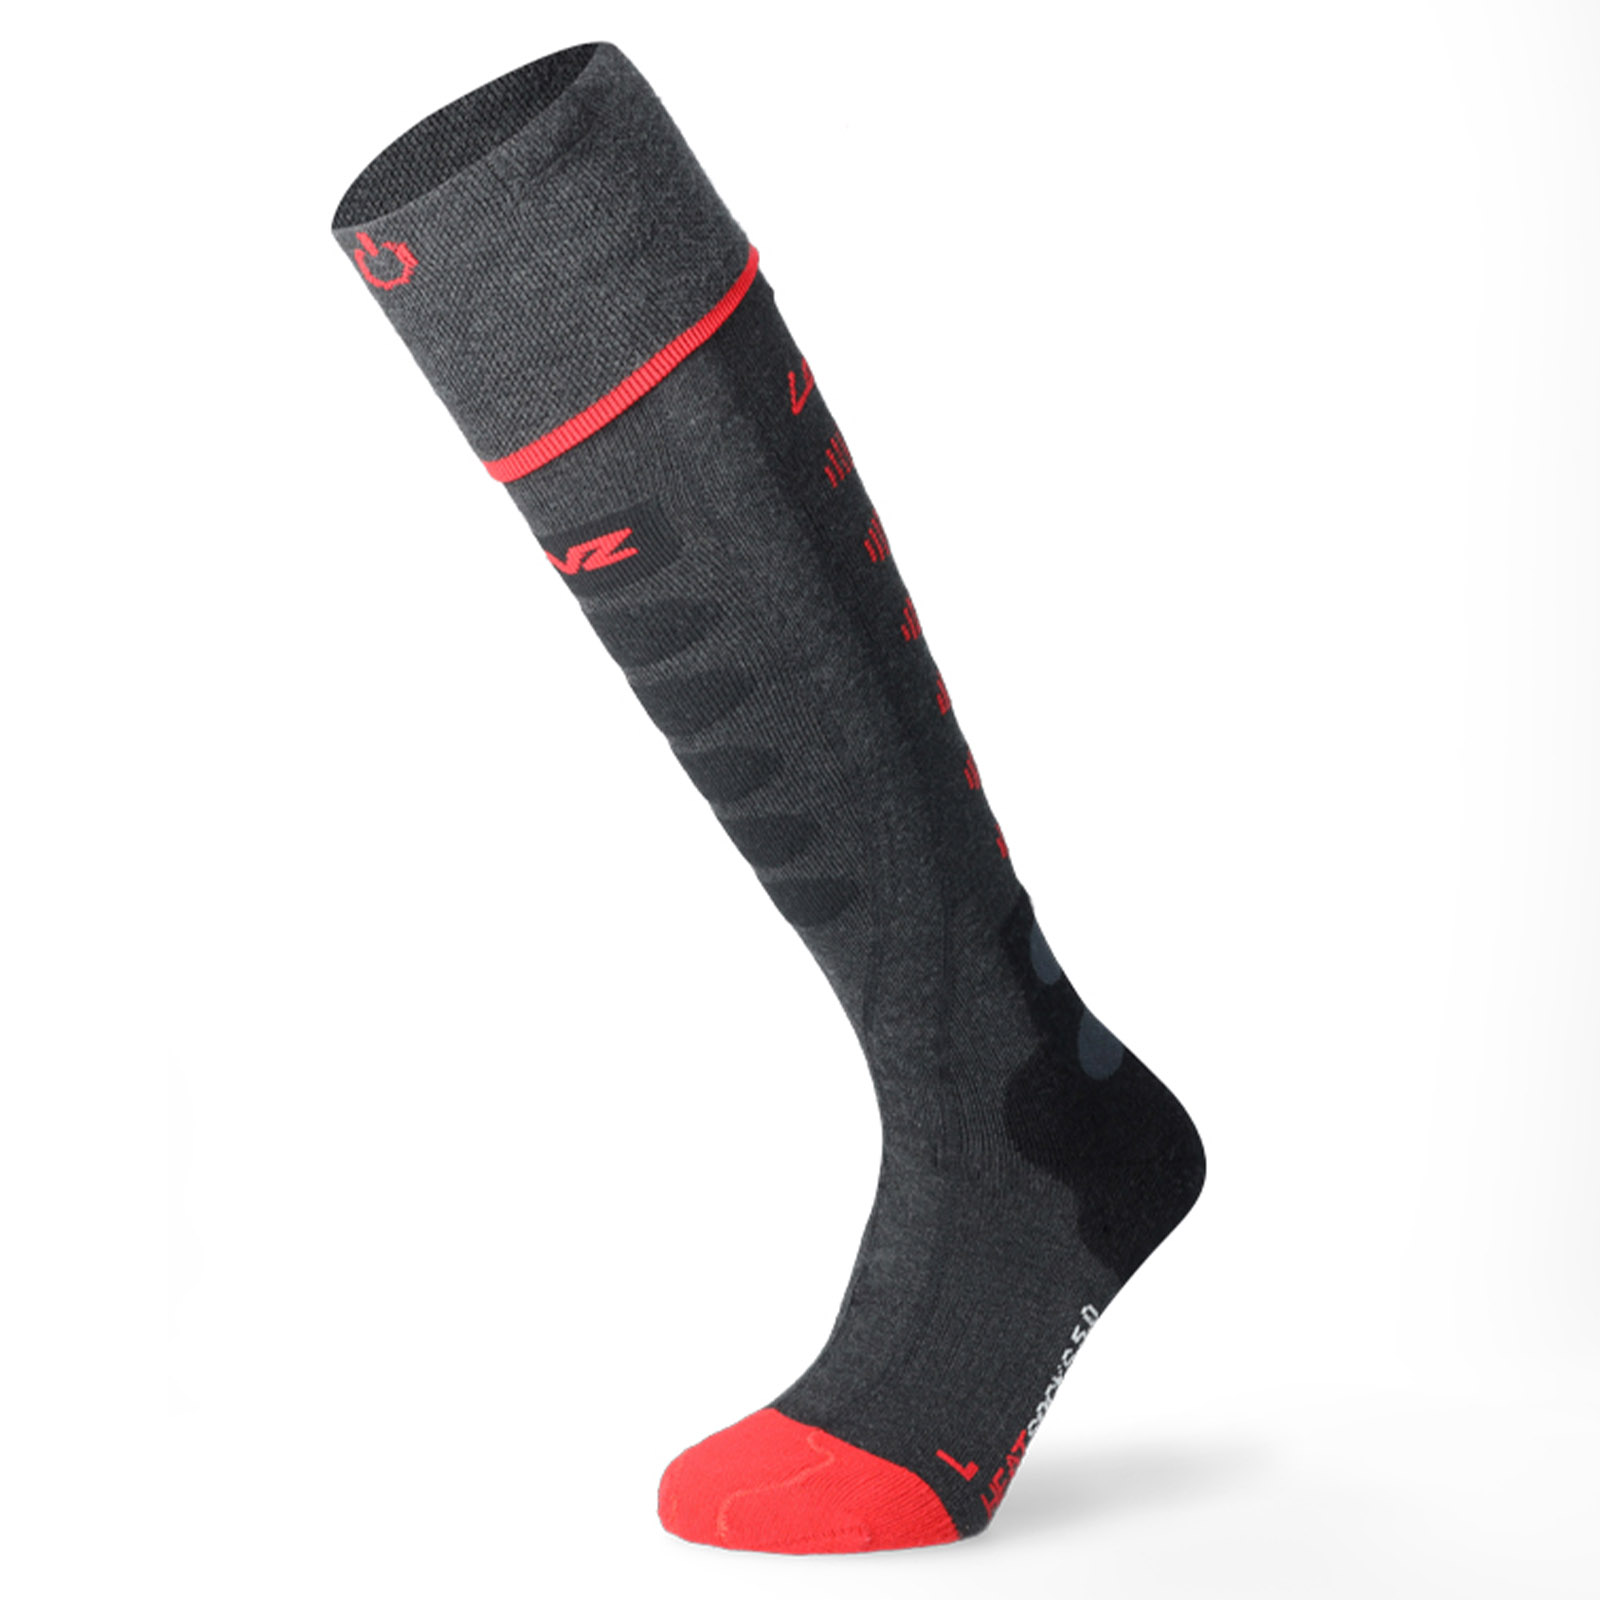 LENZ heat sock 5.1 toe cap regular fit Socken